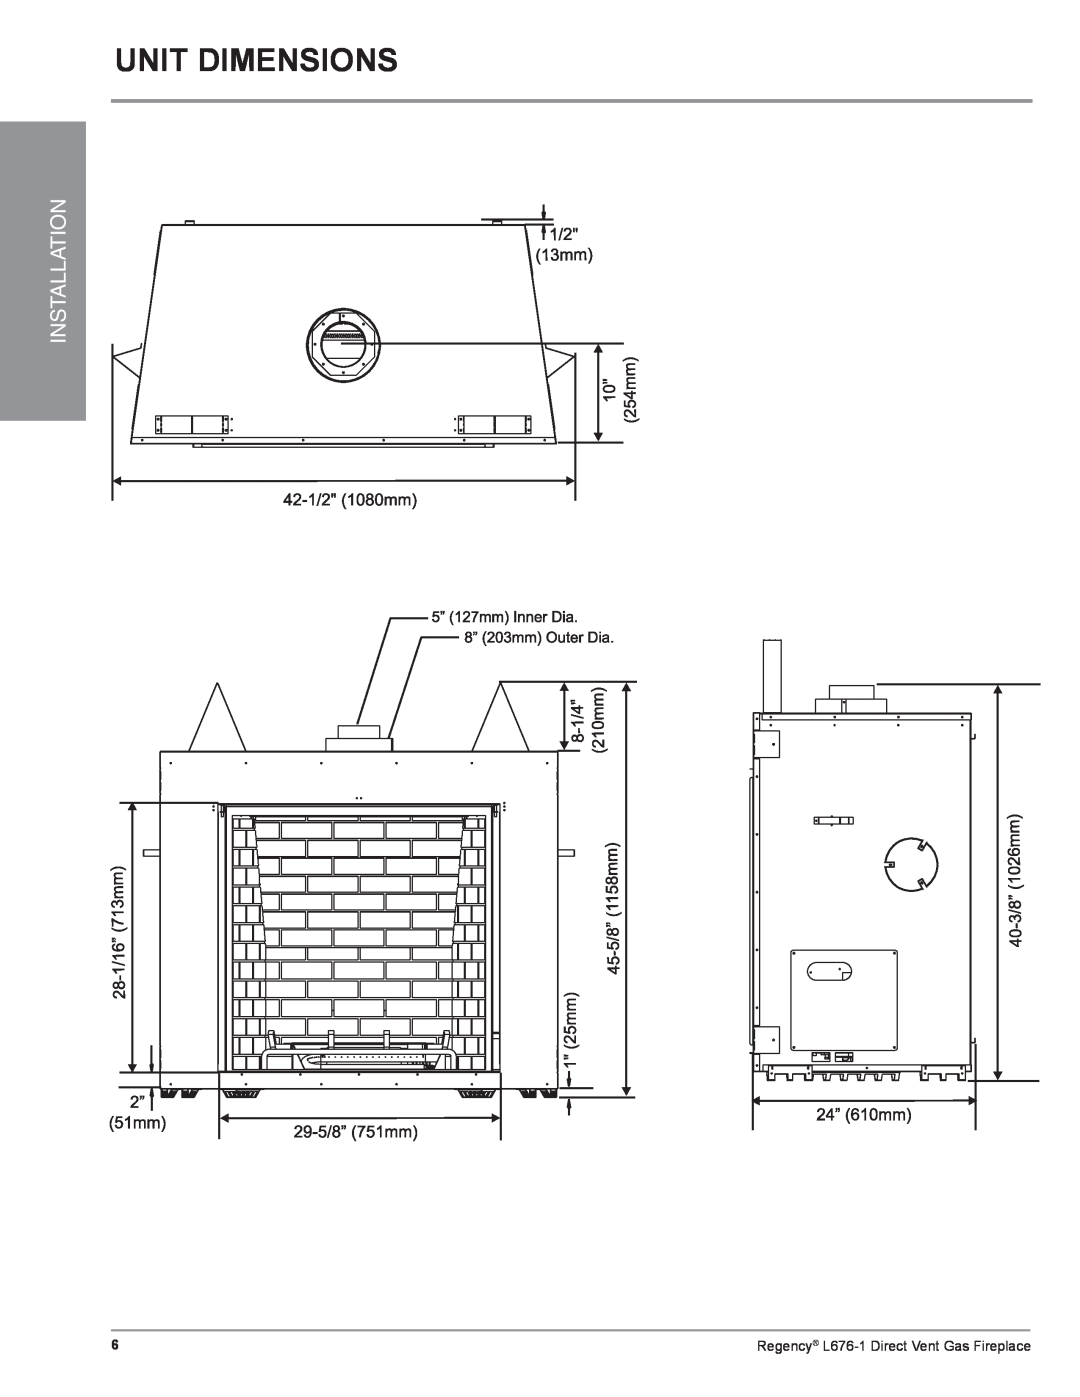 Regency L676-NG1, L676-LP1 installation manual Unit Dimensions, Installation, Regency L676-1Direct Vent Gas Fireplace 